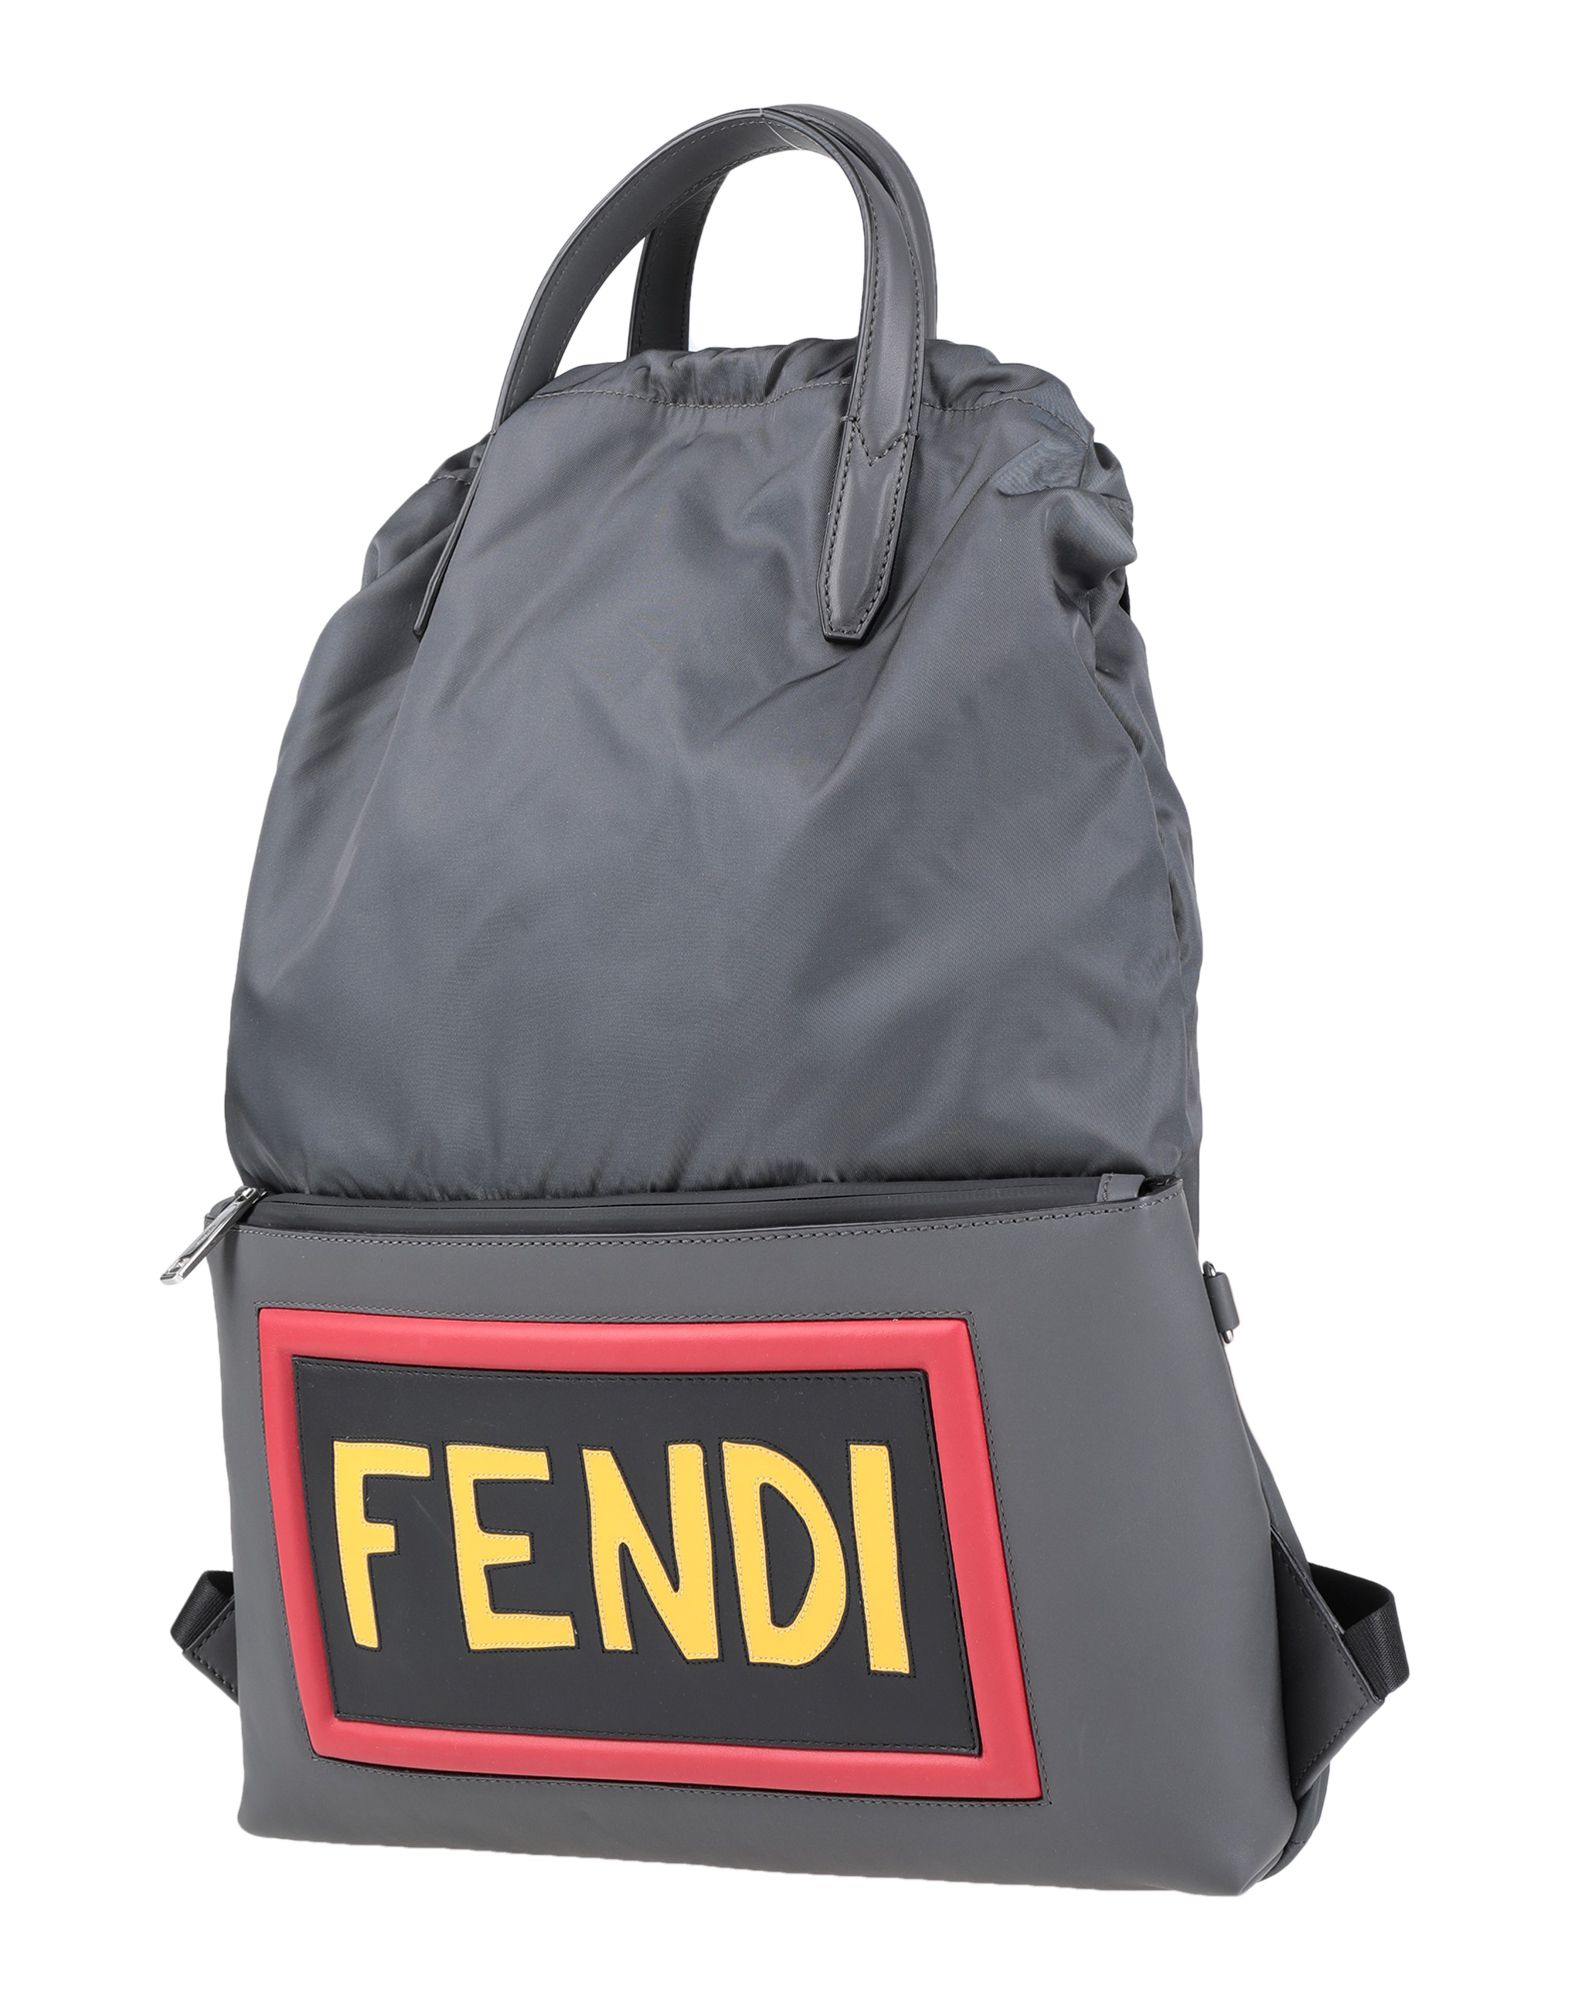 FENDI BACKPACKS & FANNY PACKS,45405837RQ 1